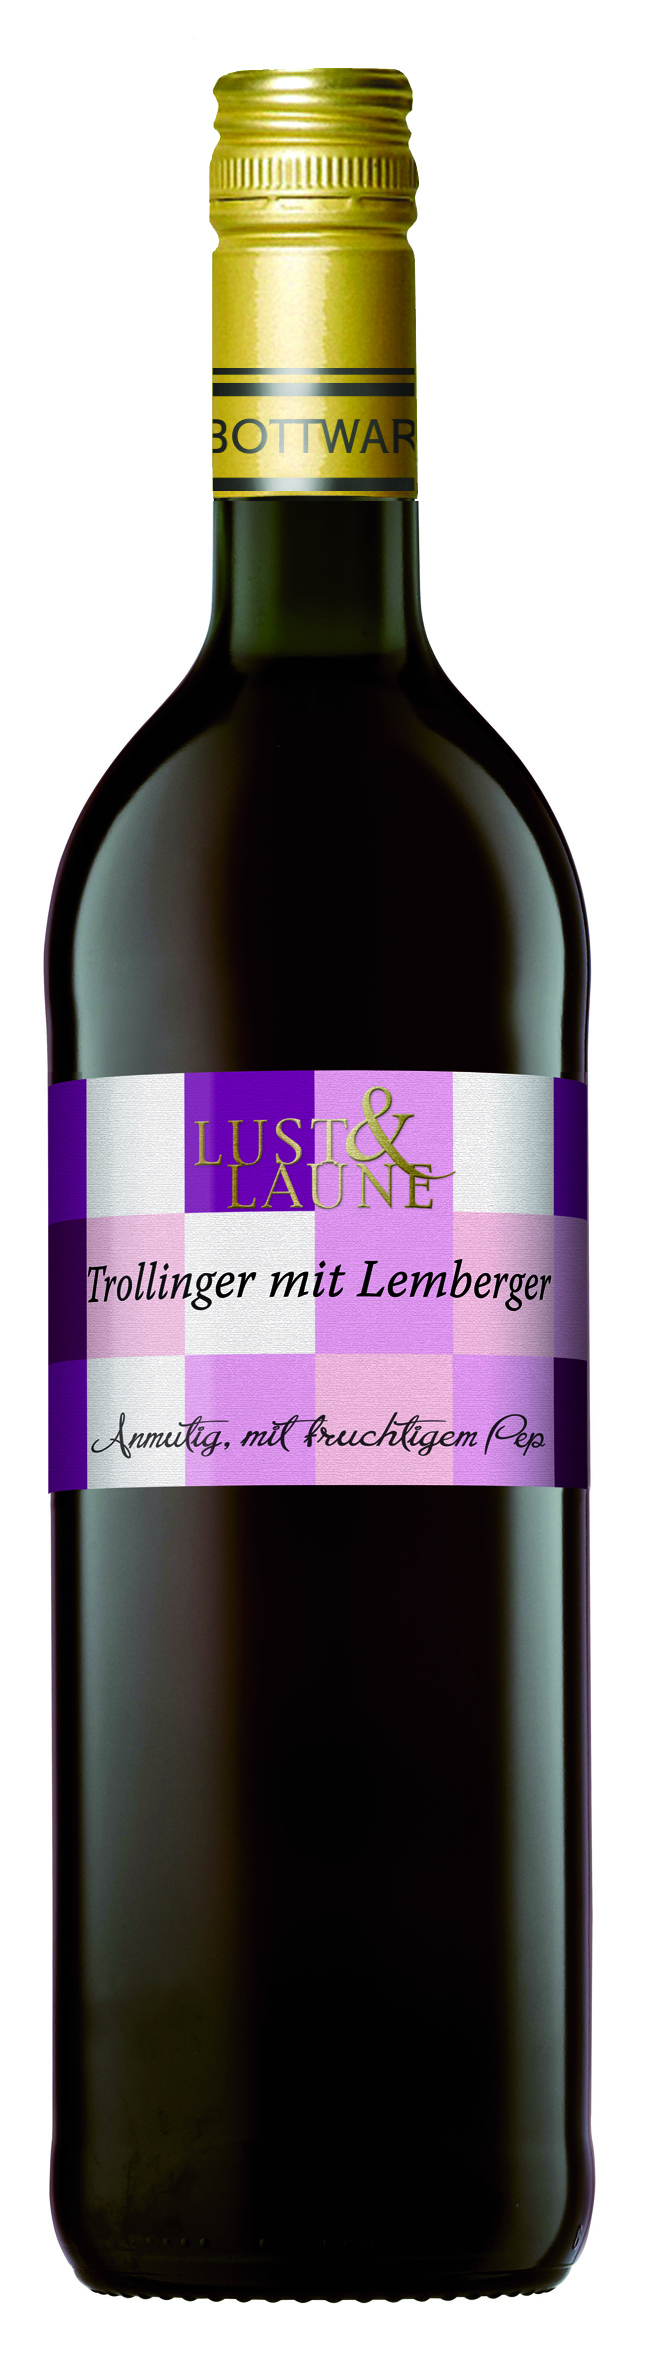 Lust & Laune Trollinger mit Lemberger 0,75 L - Bottwartaler Winzer